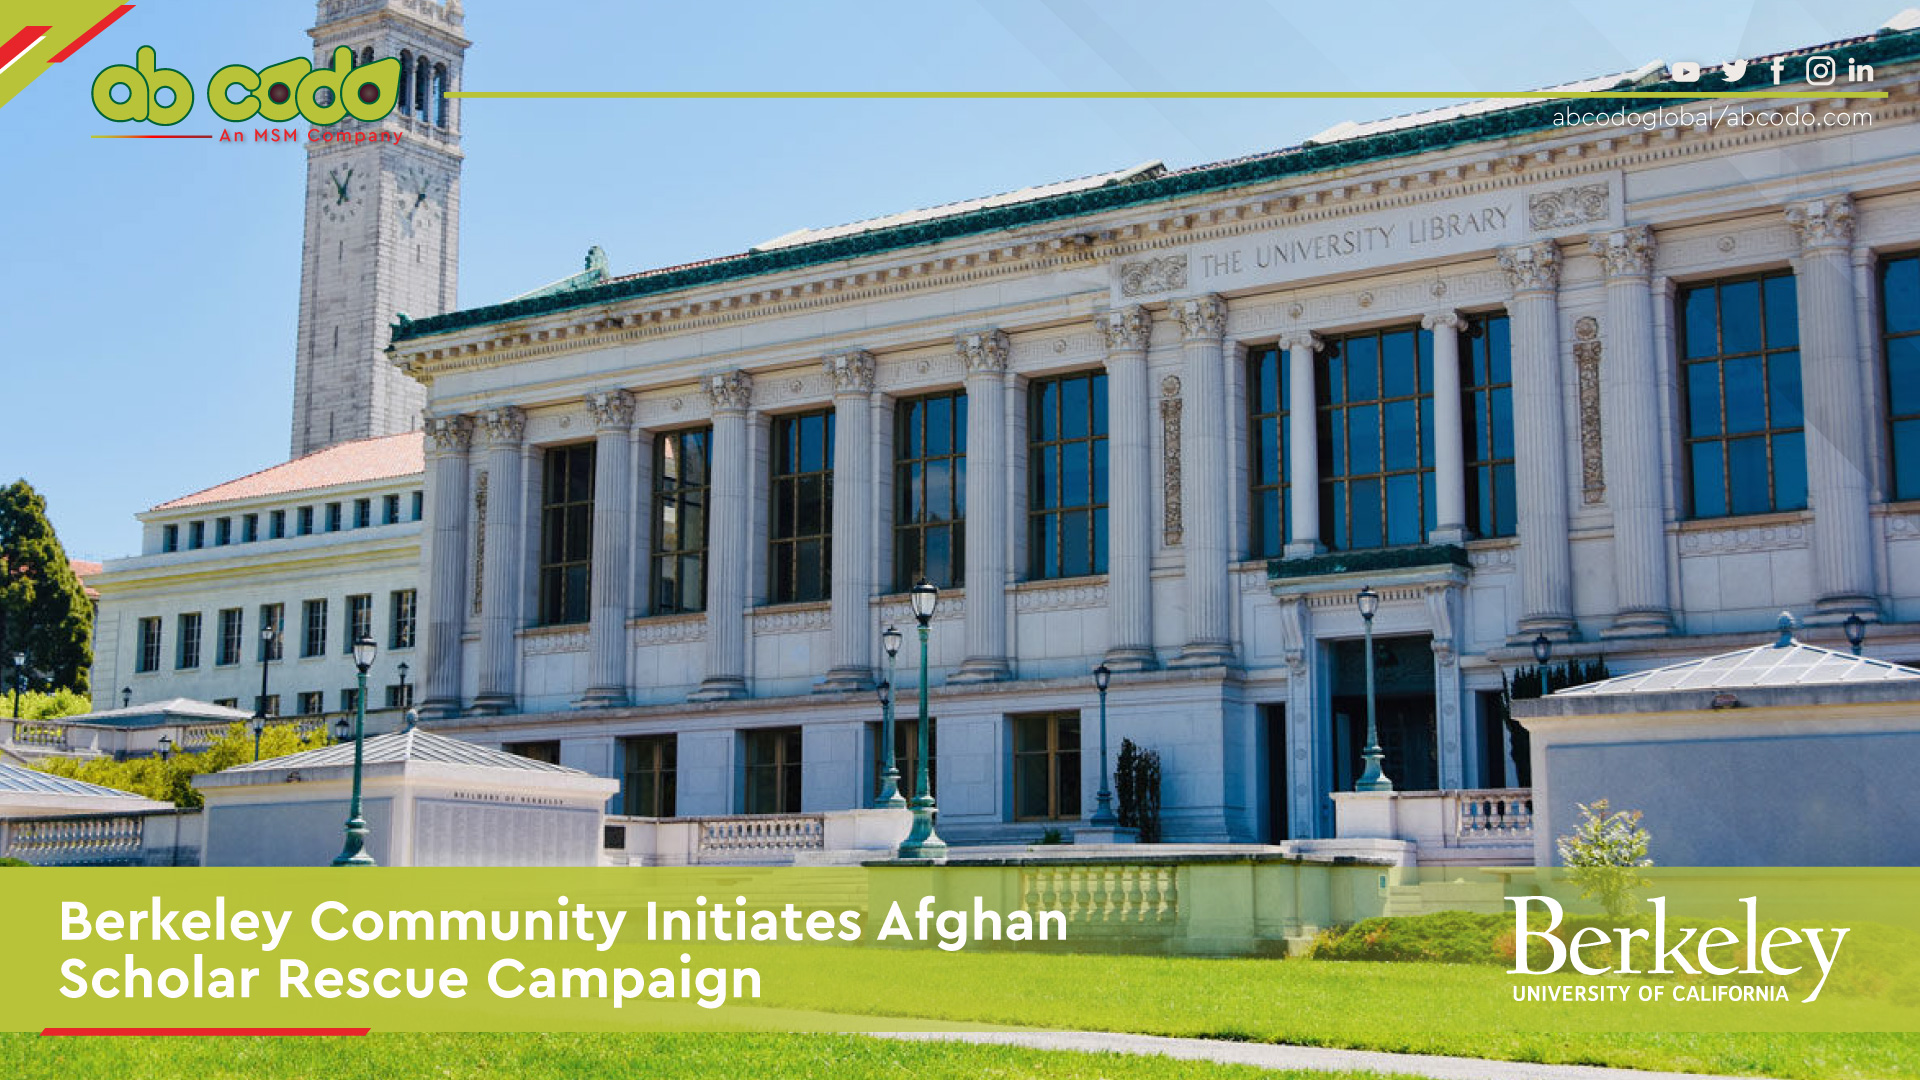 Berkeley Community Initiates Afghan Scholar Rescue Campaign